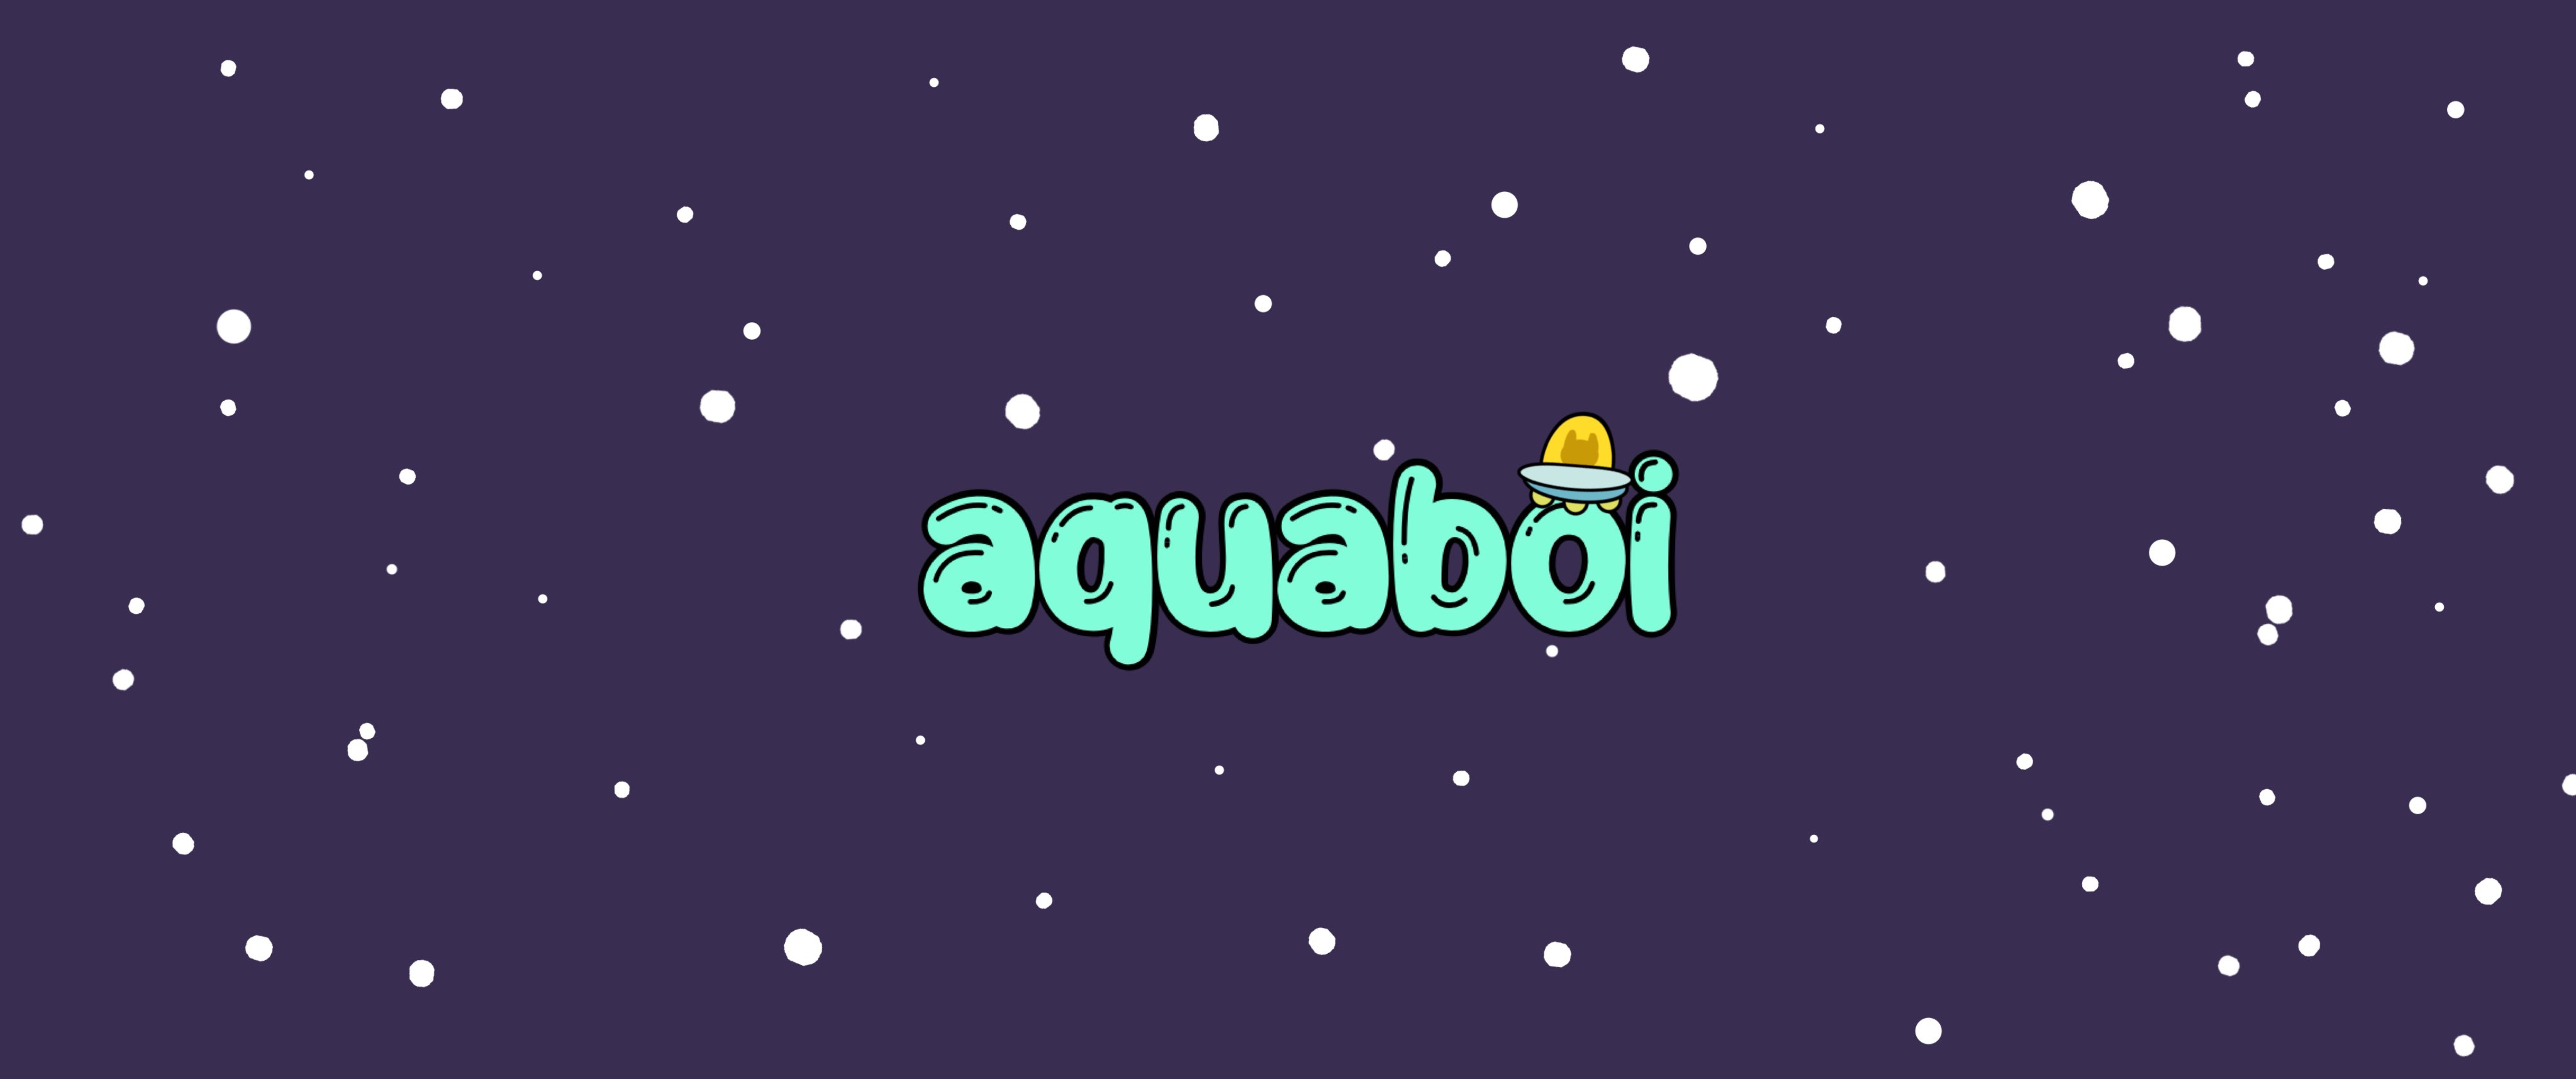 Aquaboi 横幅